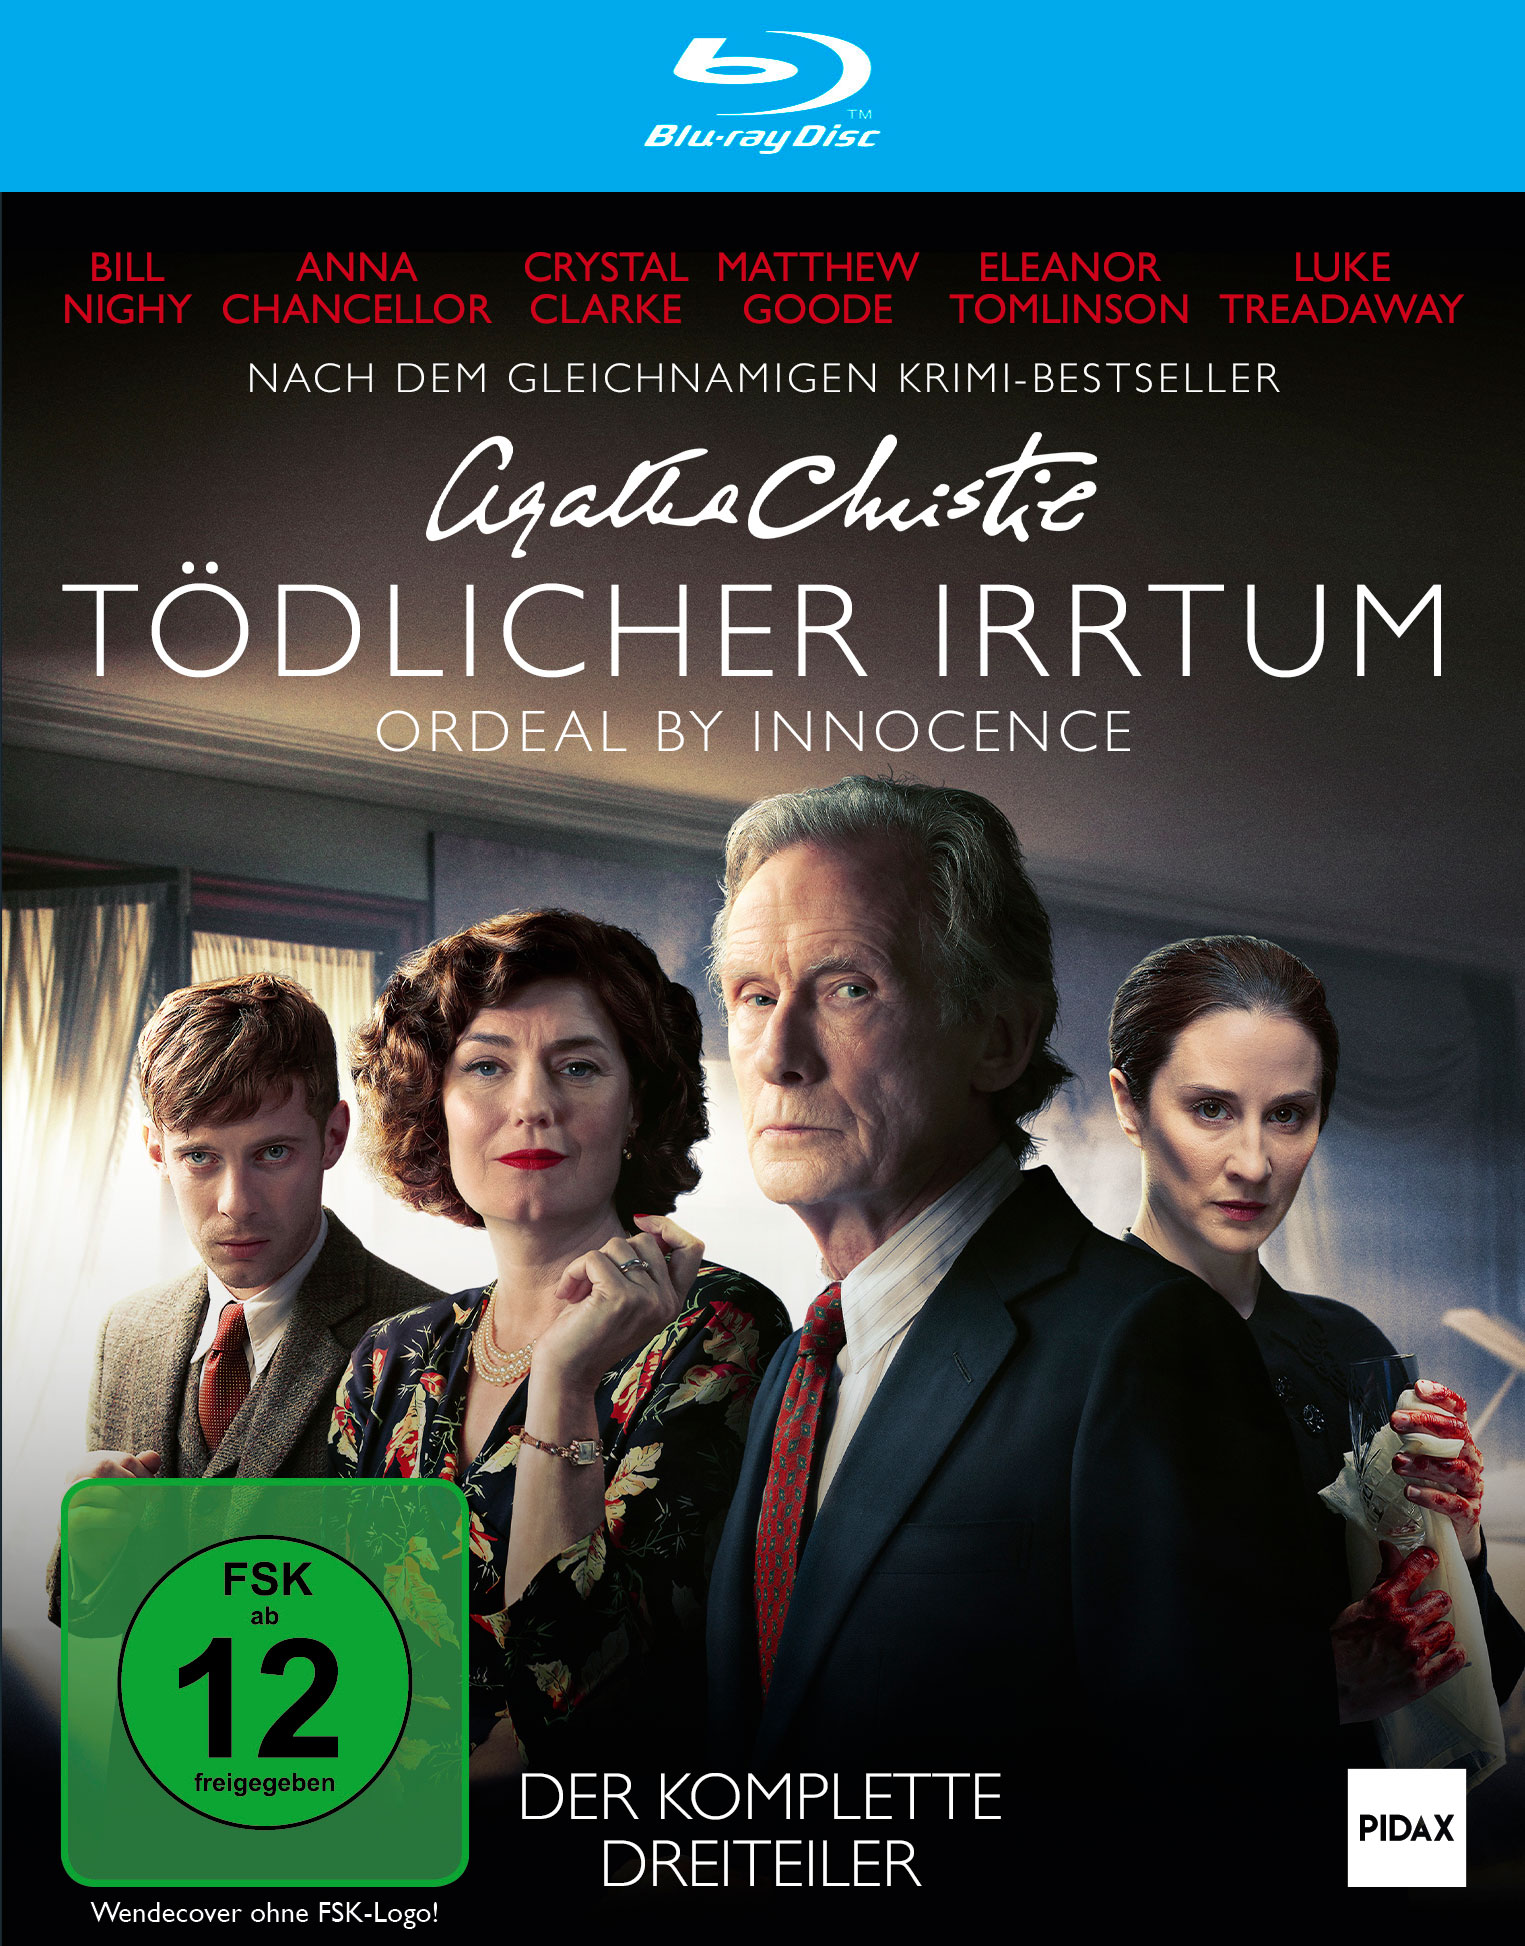 Agatha Christie: Tödlicher Irrtum (Ordeal by Innocence)